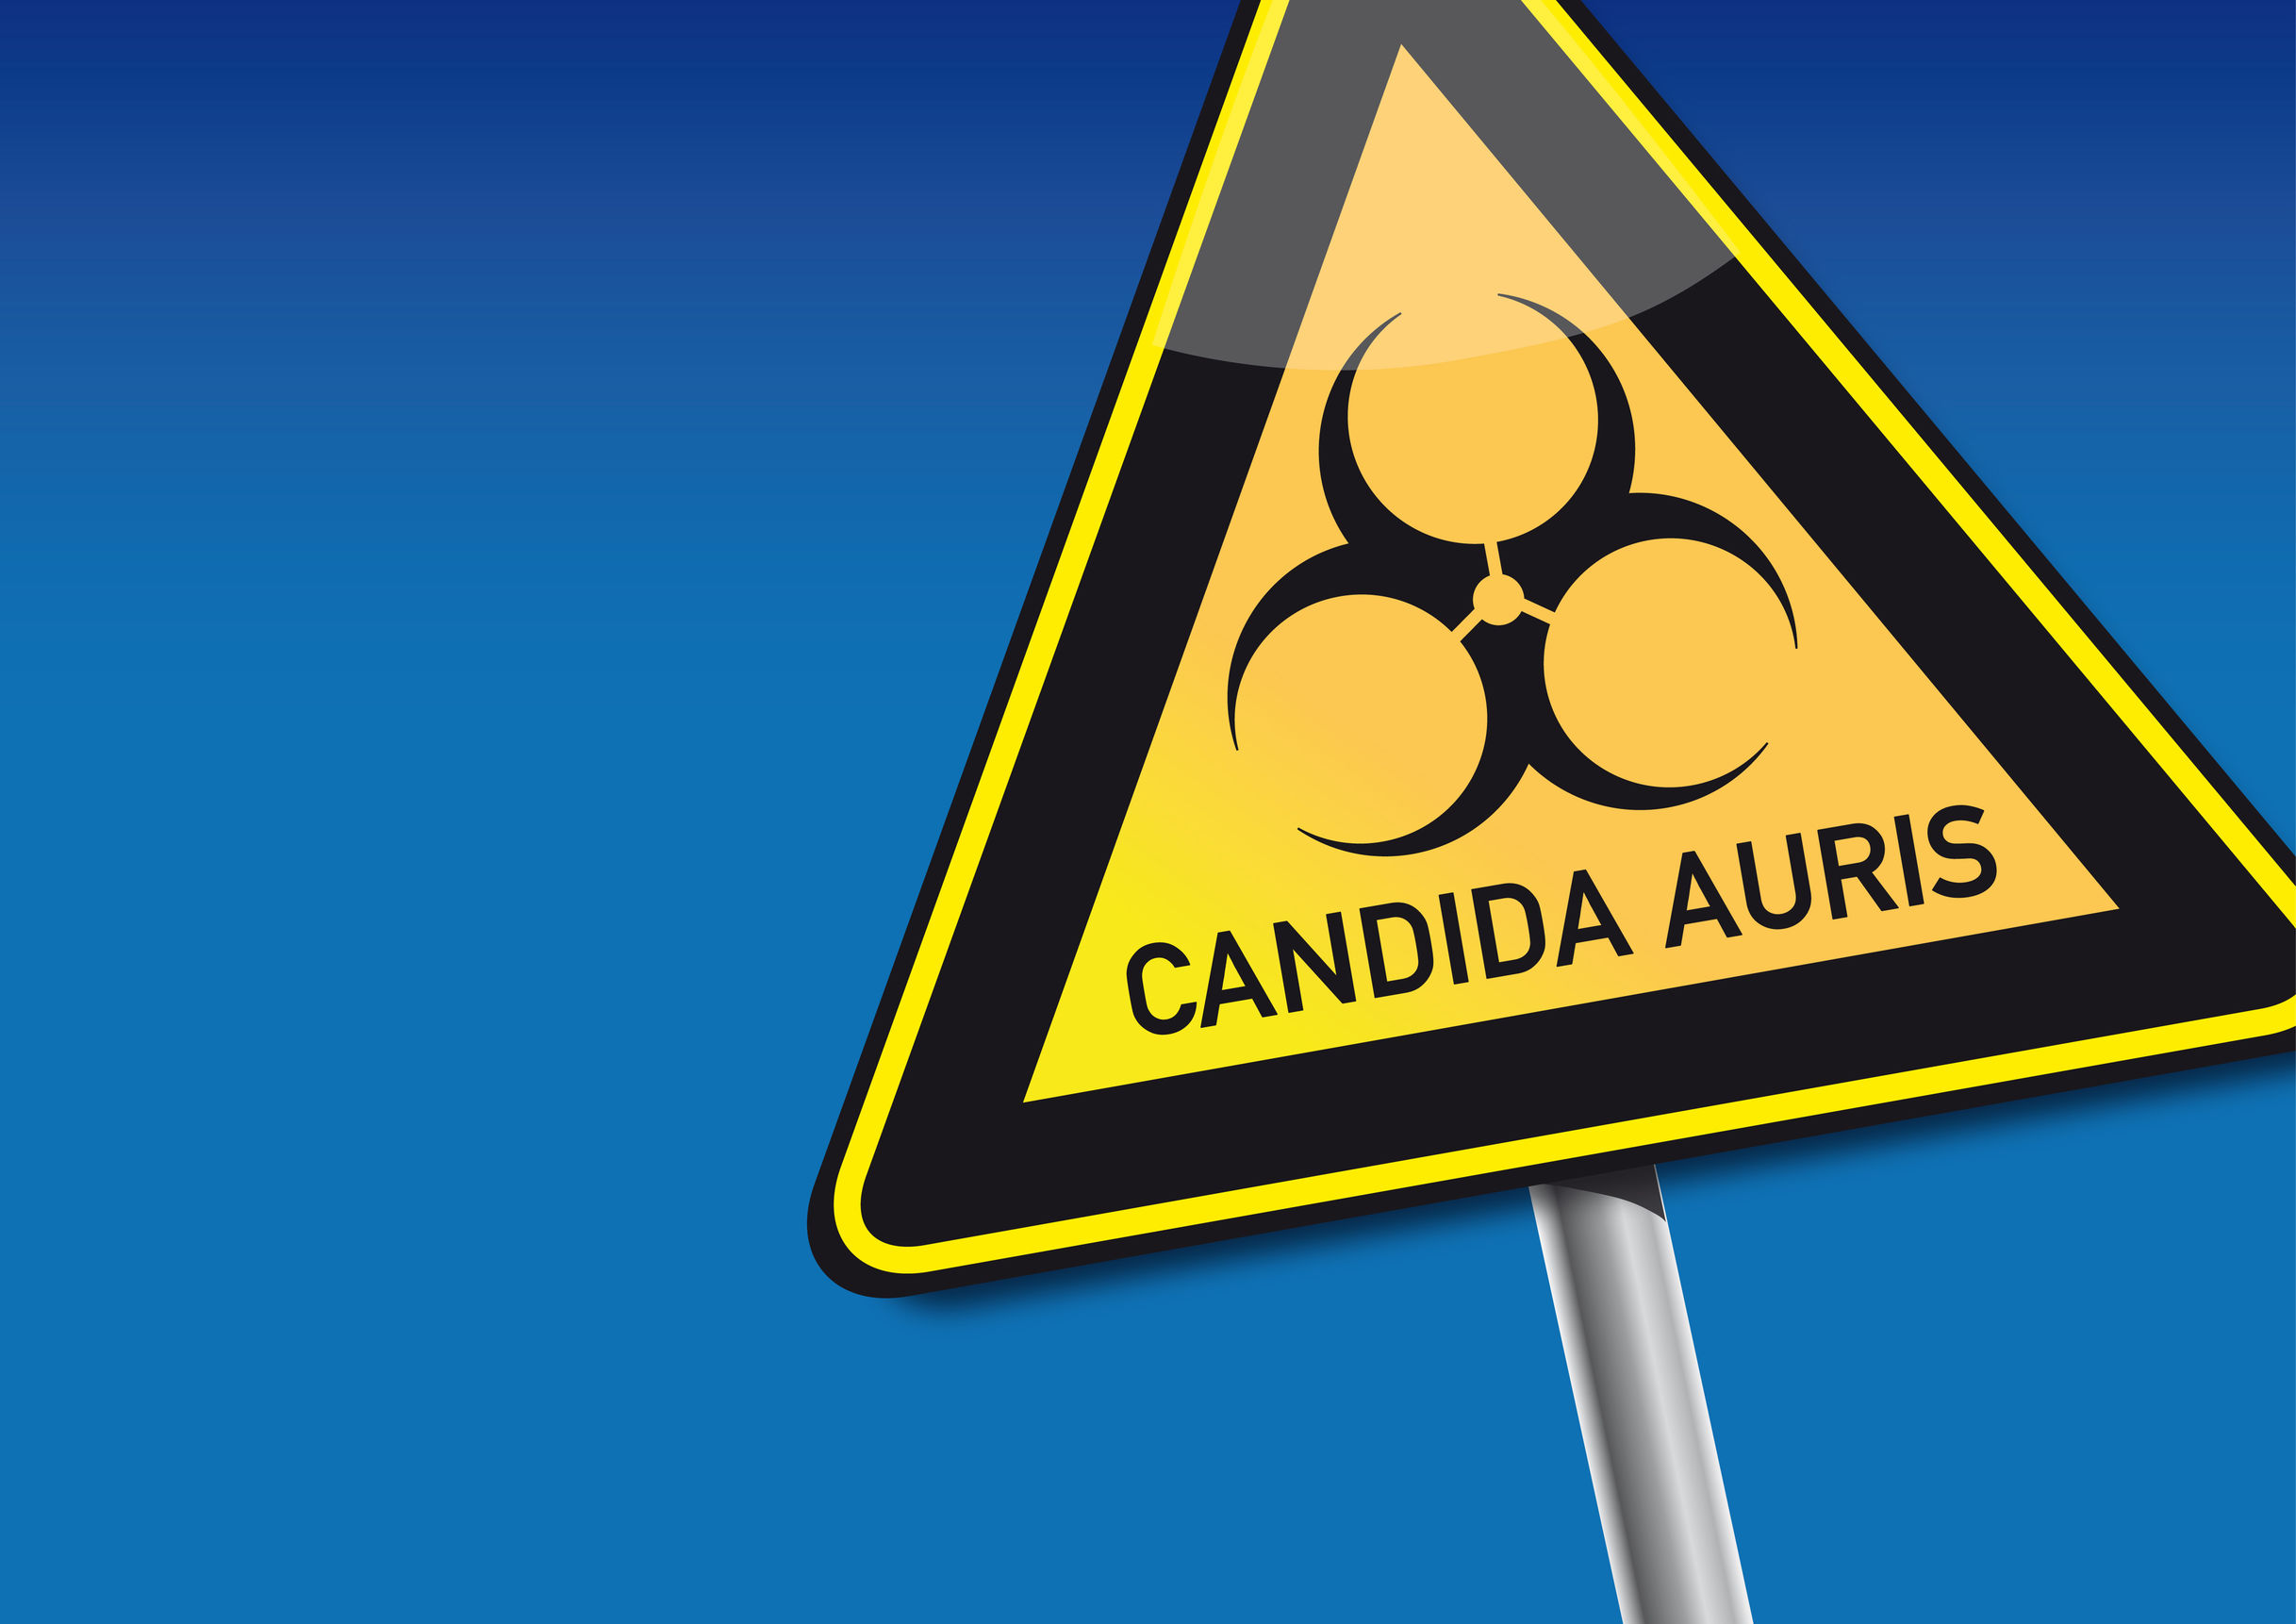 Warning Candida Auris